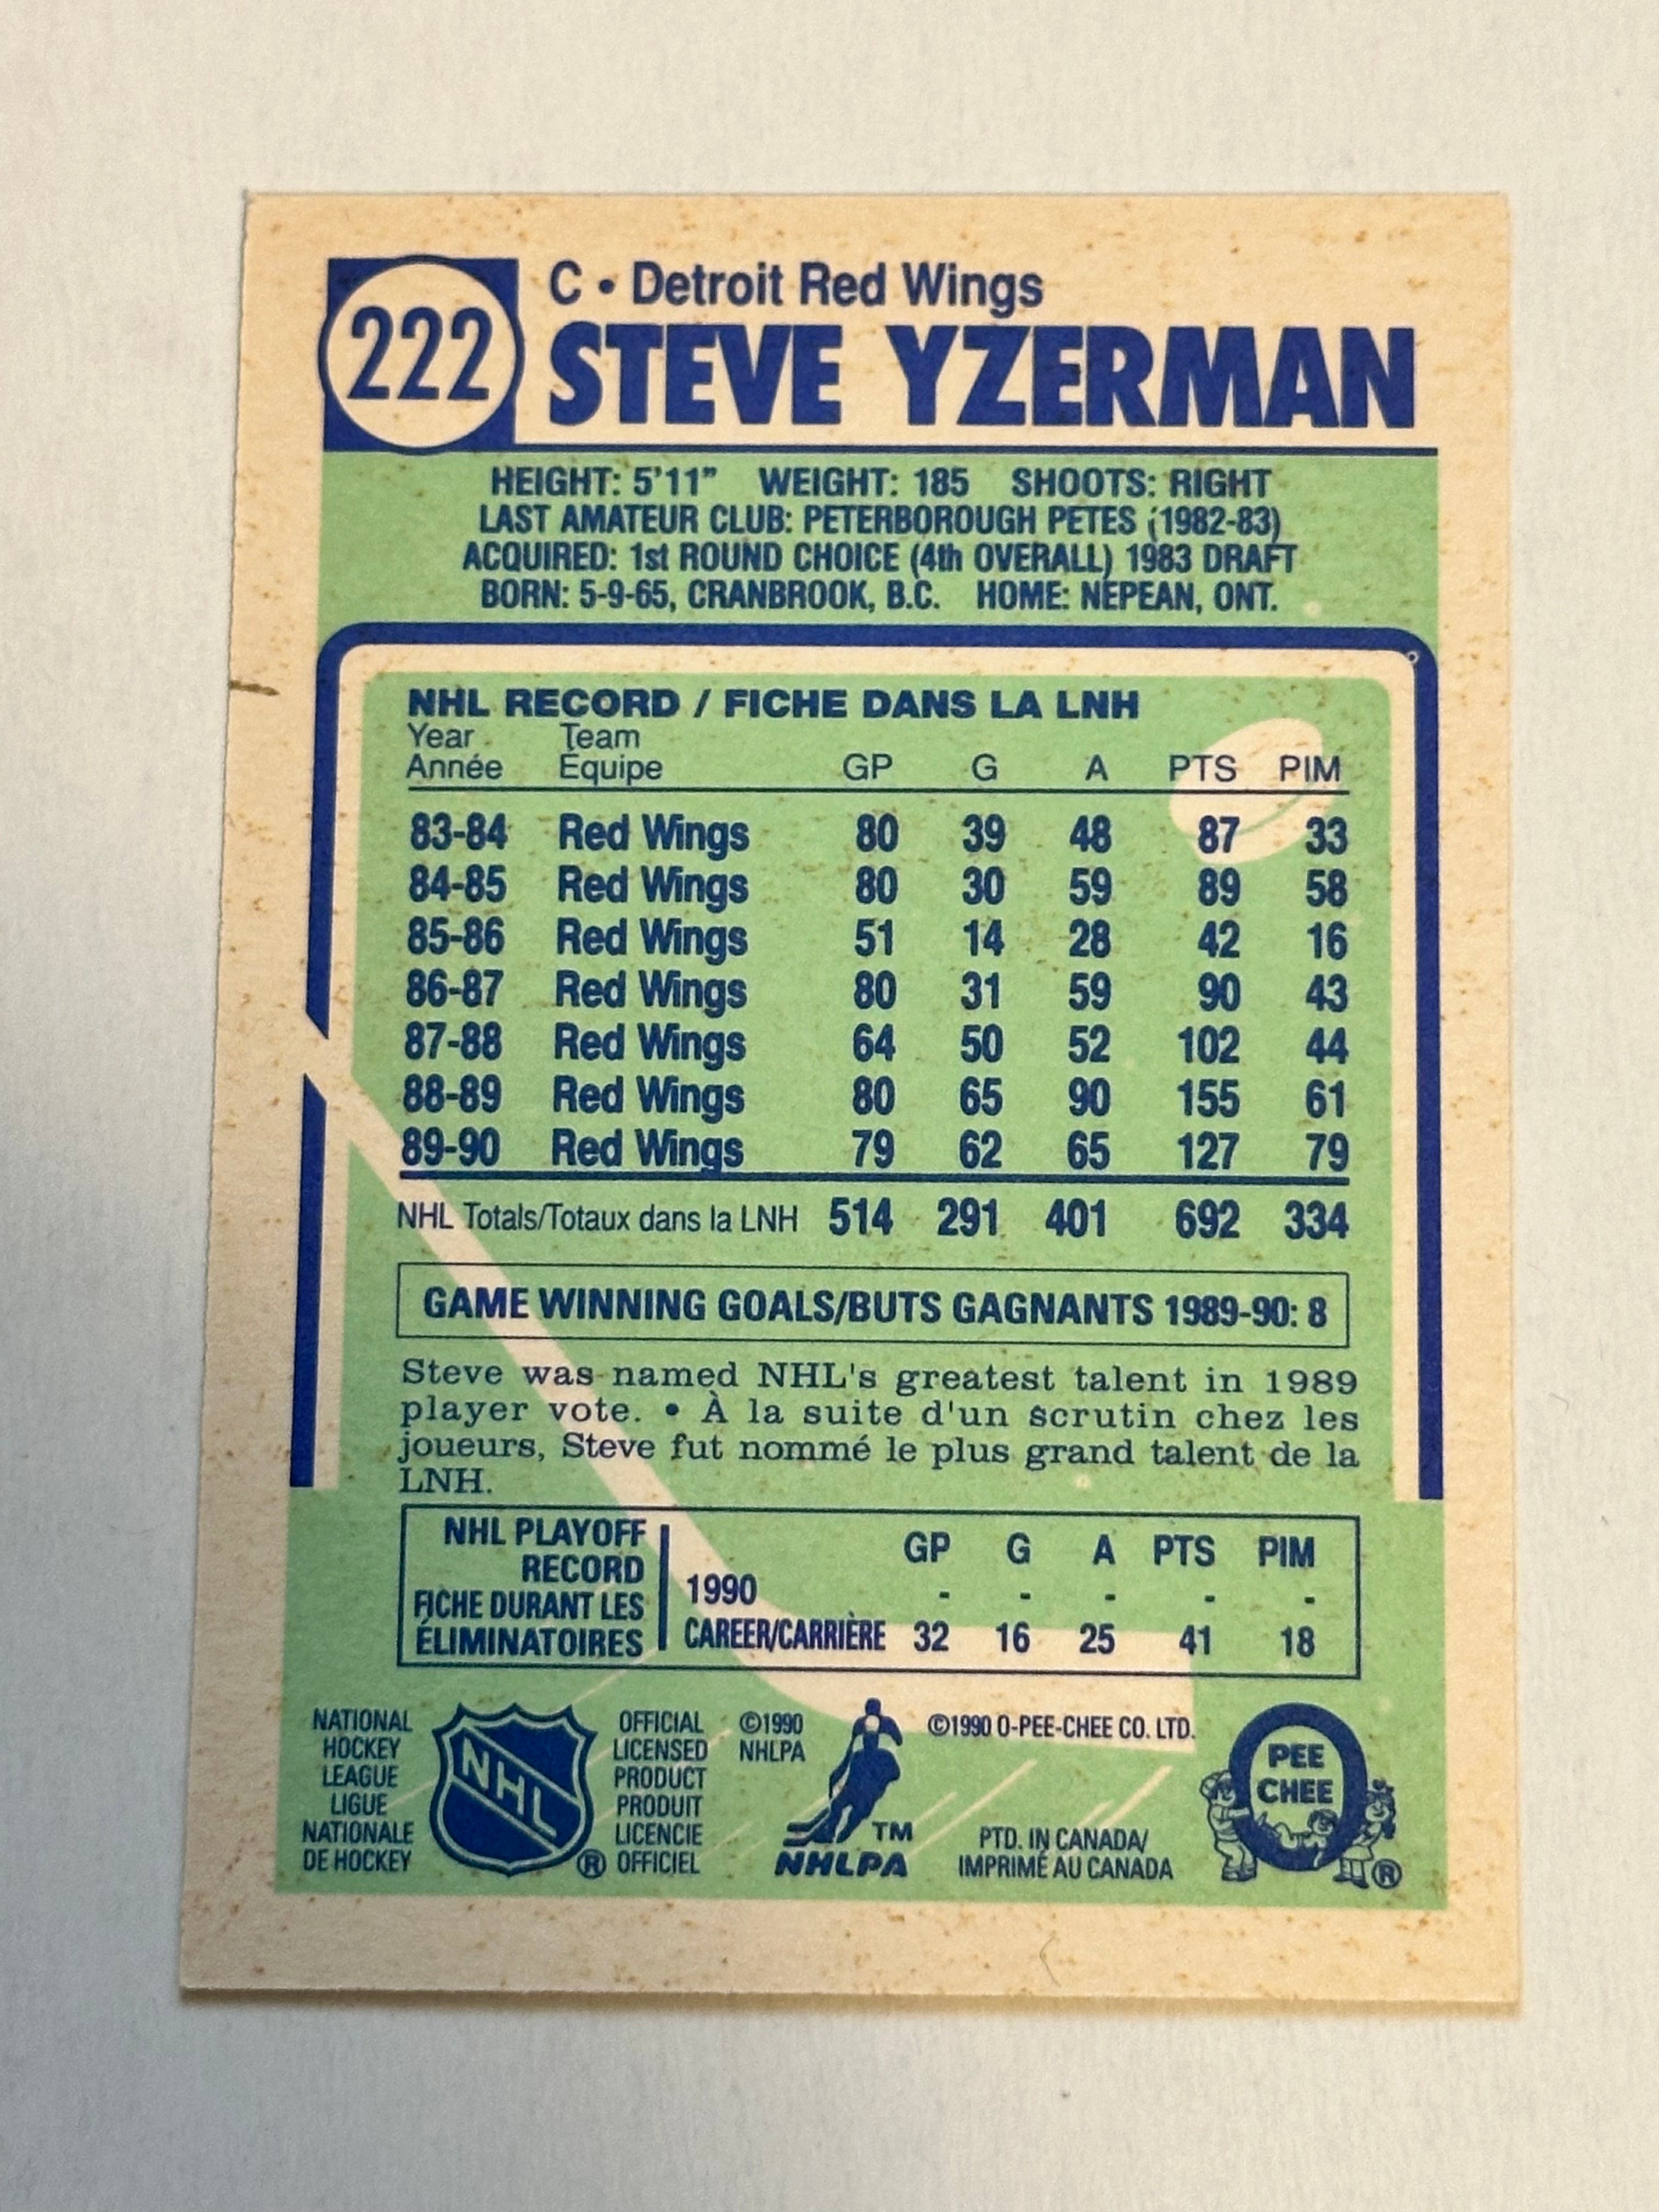 Steve Yzerman great signed hockey card with COA